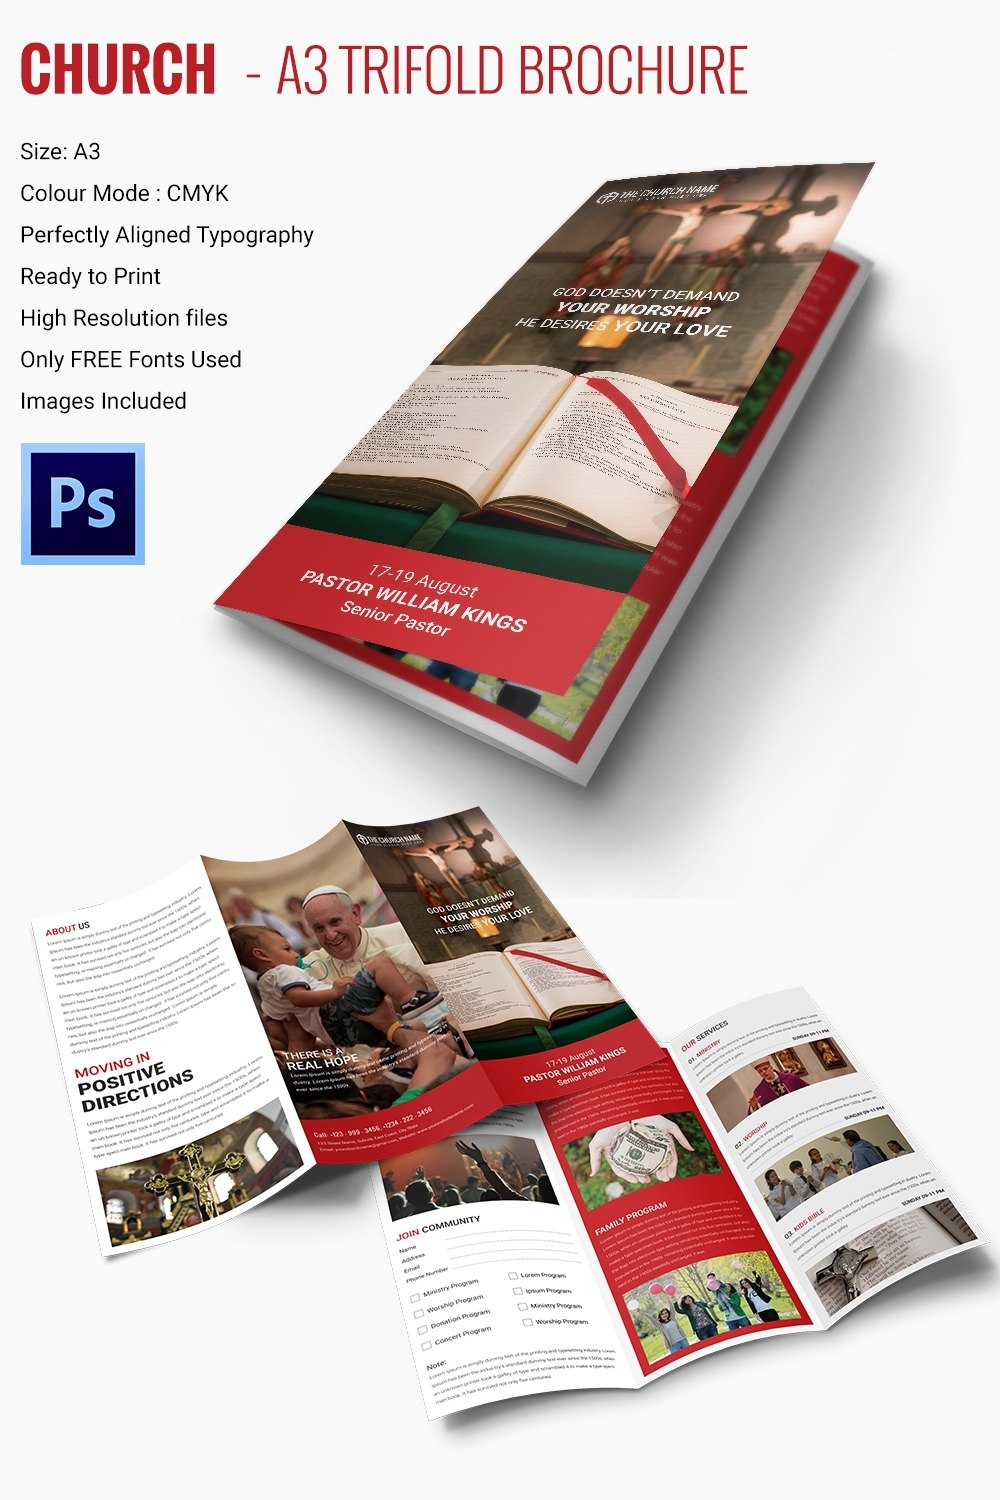 Popular Church Brochure Templates  Aipsd Docs Pages  Free in Free Church Brochure Templates For Microsoft Word